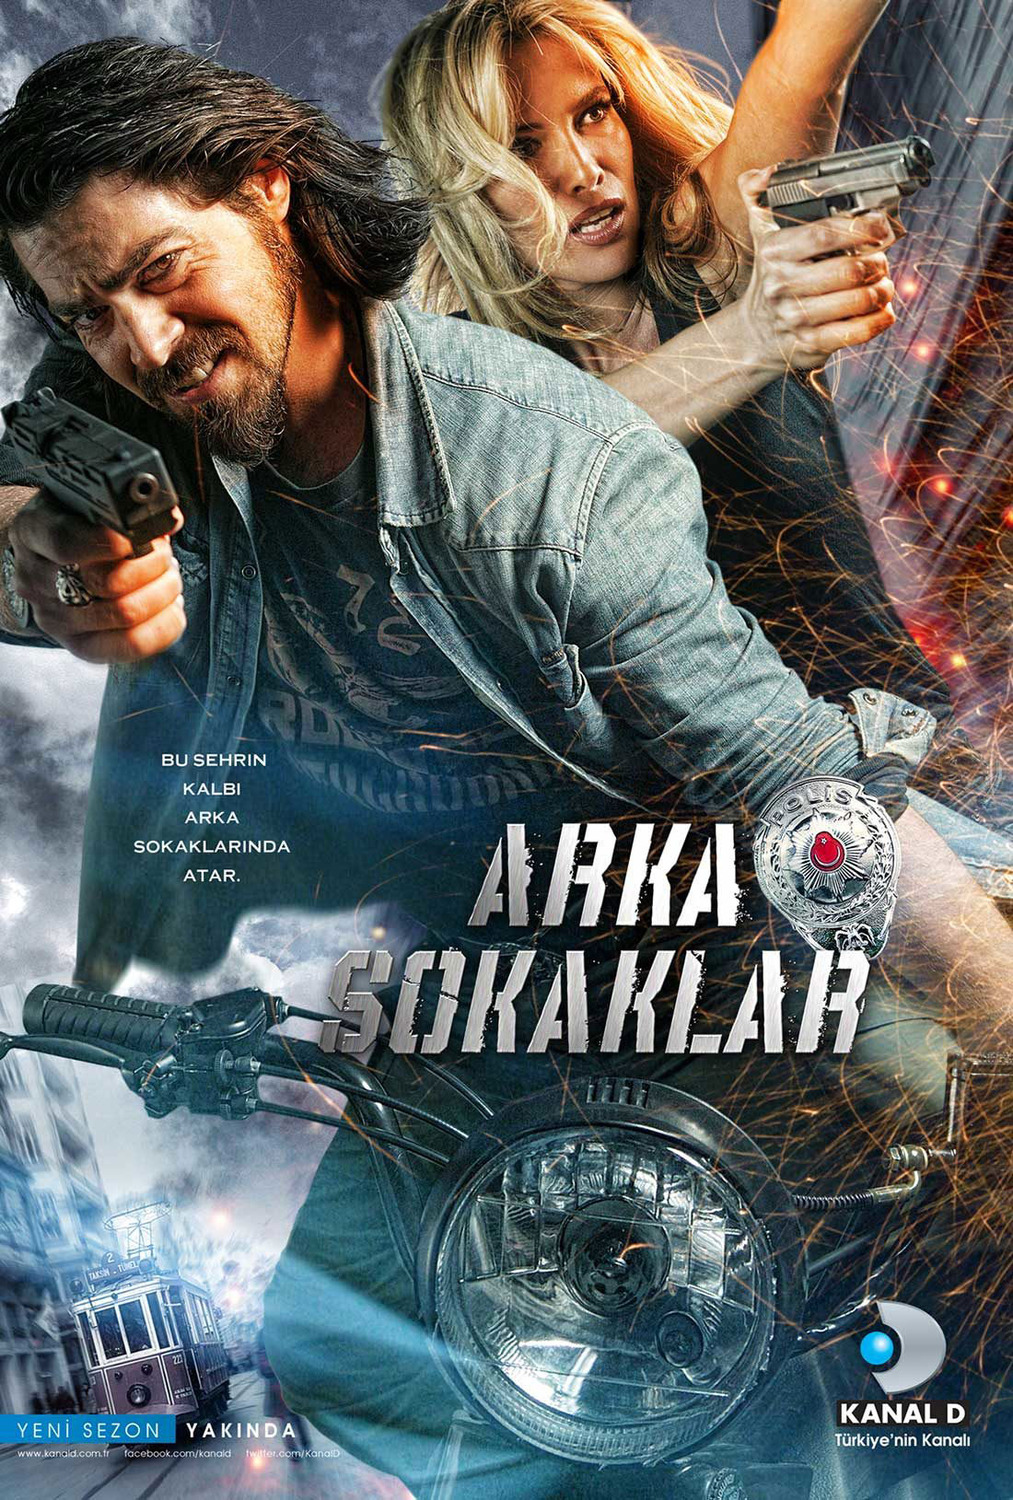 Extra Large TV Poster Image for Arka sokaklar (#4 of 11)